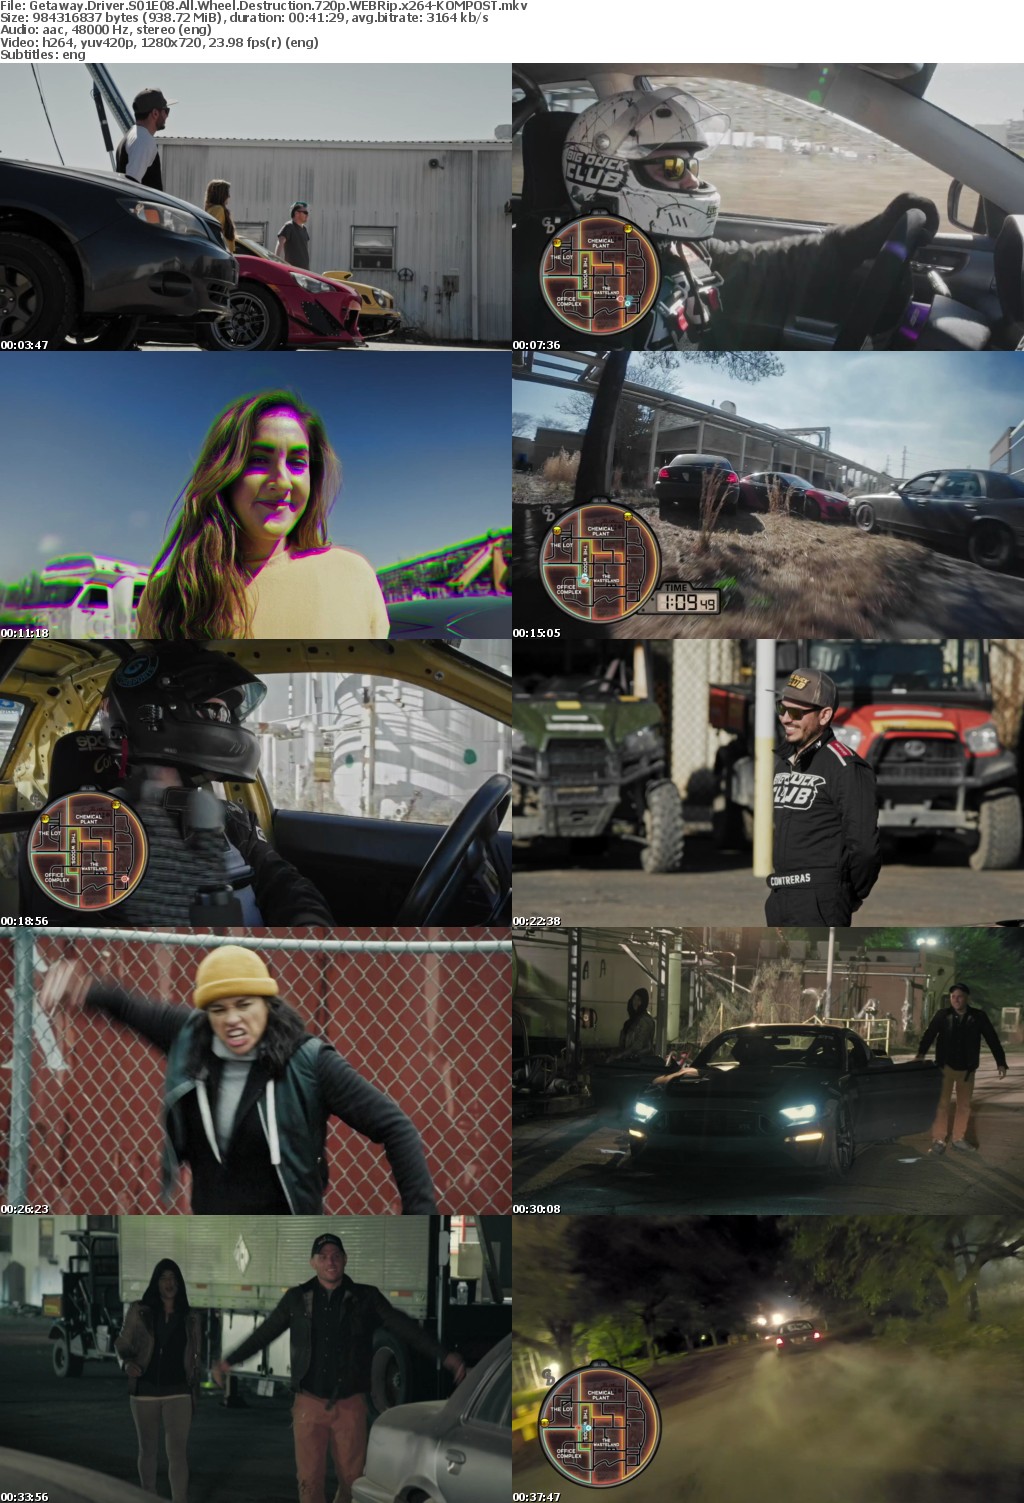 Getaway Driver S01E08 All Wheel Destruction 720p WEBRip x264-KOMPOST